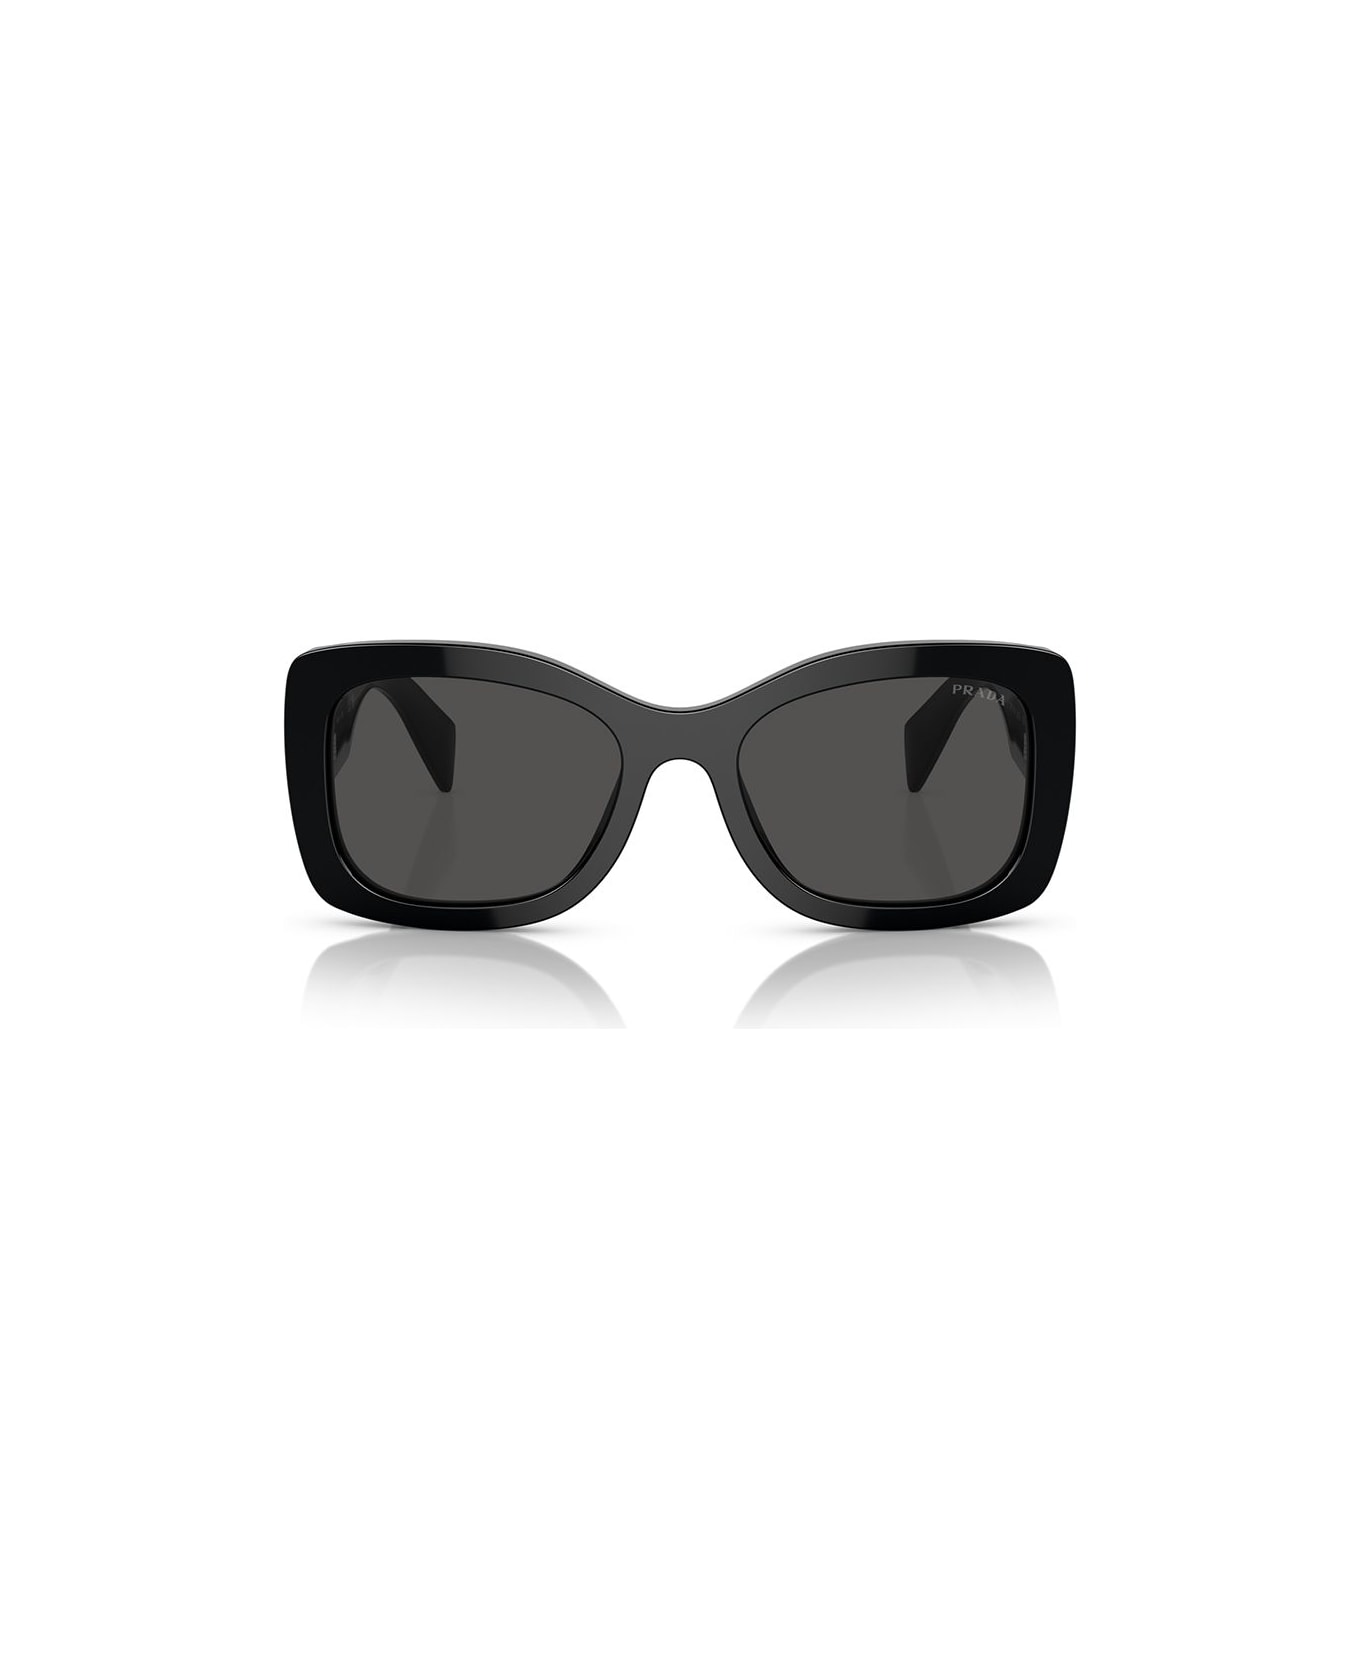 Prada Eyewear Sole Sunglasses - 1AB5S0